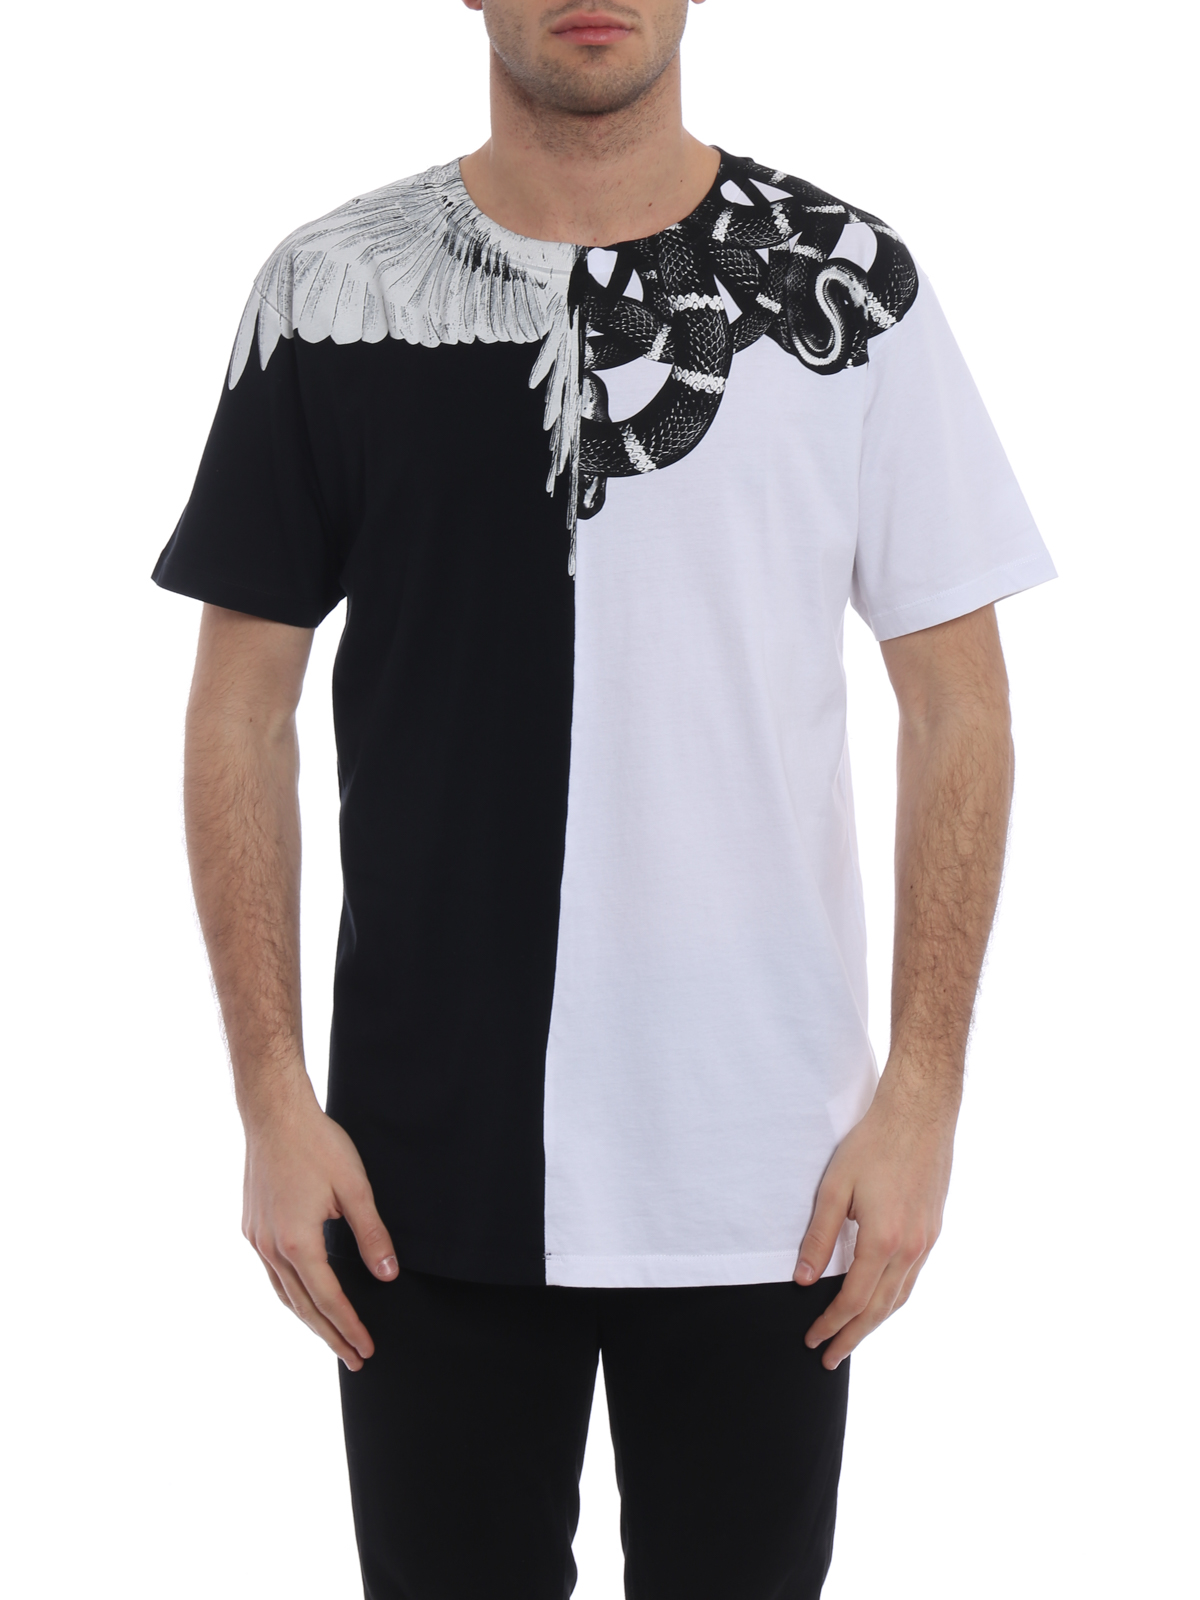 jukbeen Fragiel Donder T-shirts Marcelo Burlon - Snake Wing T-shirt - CMAA018S180010080188